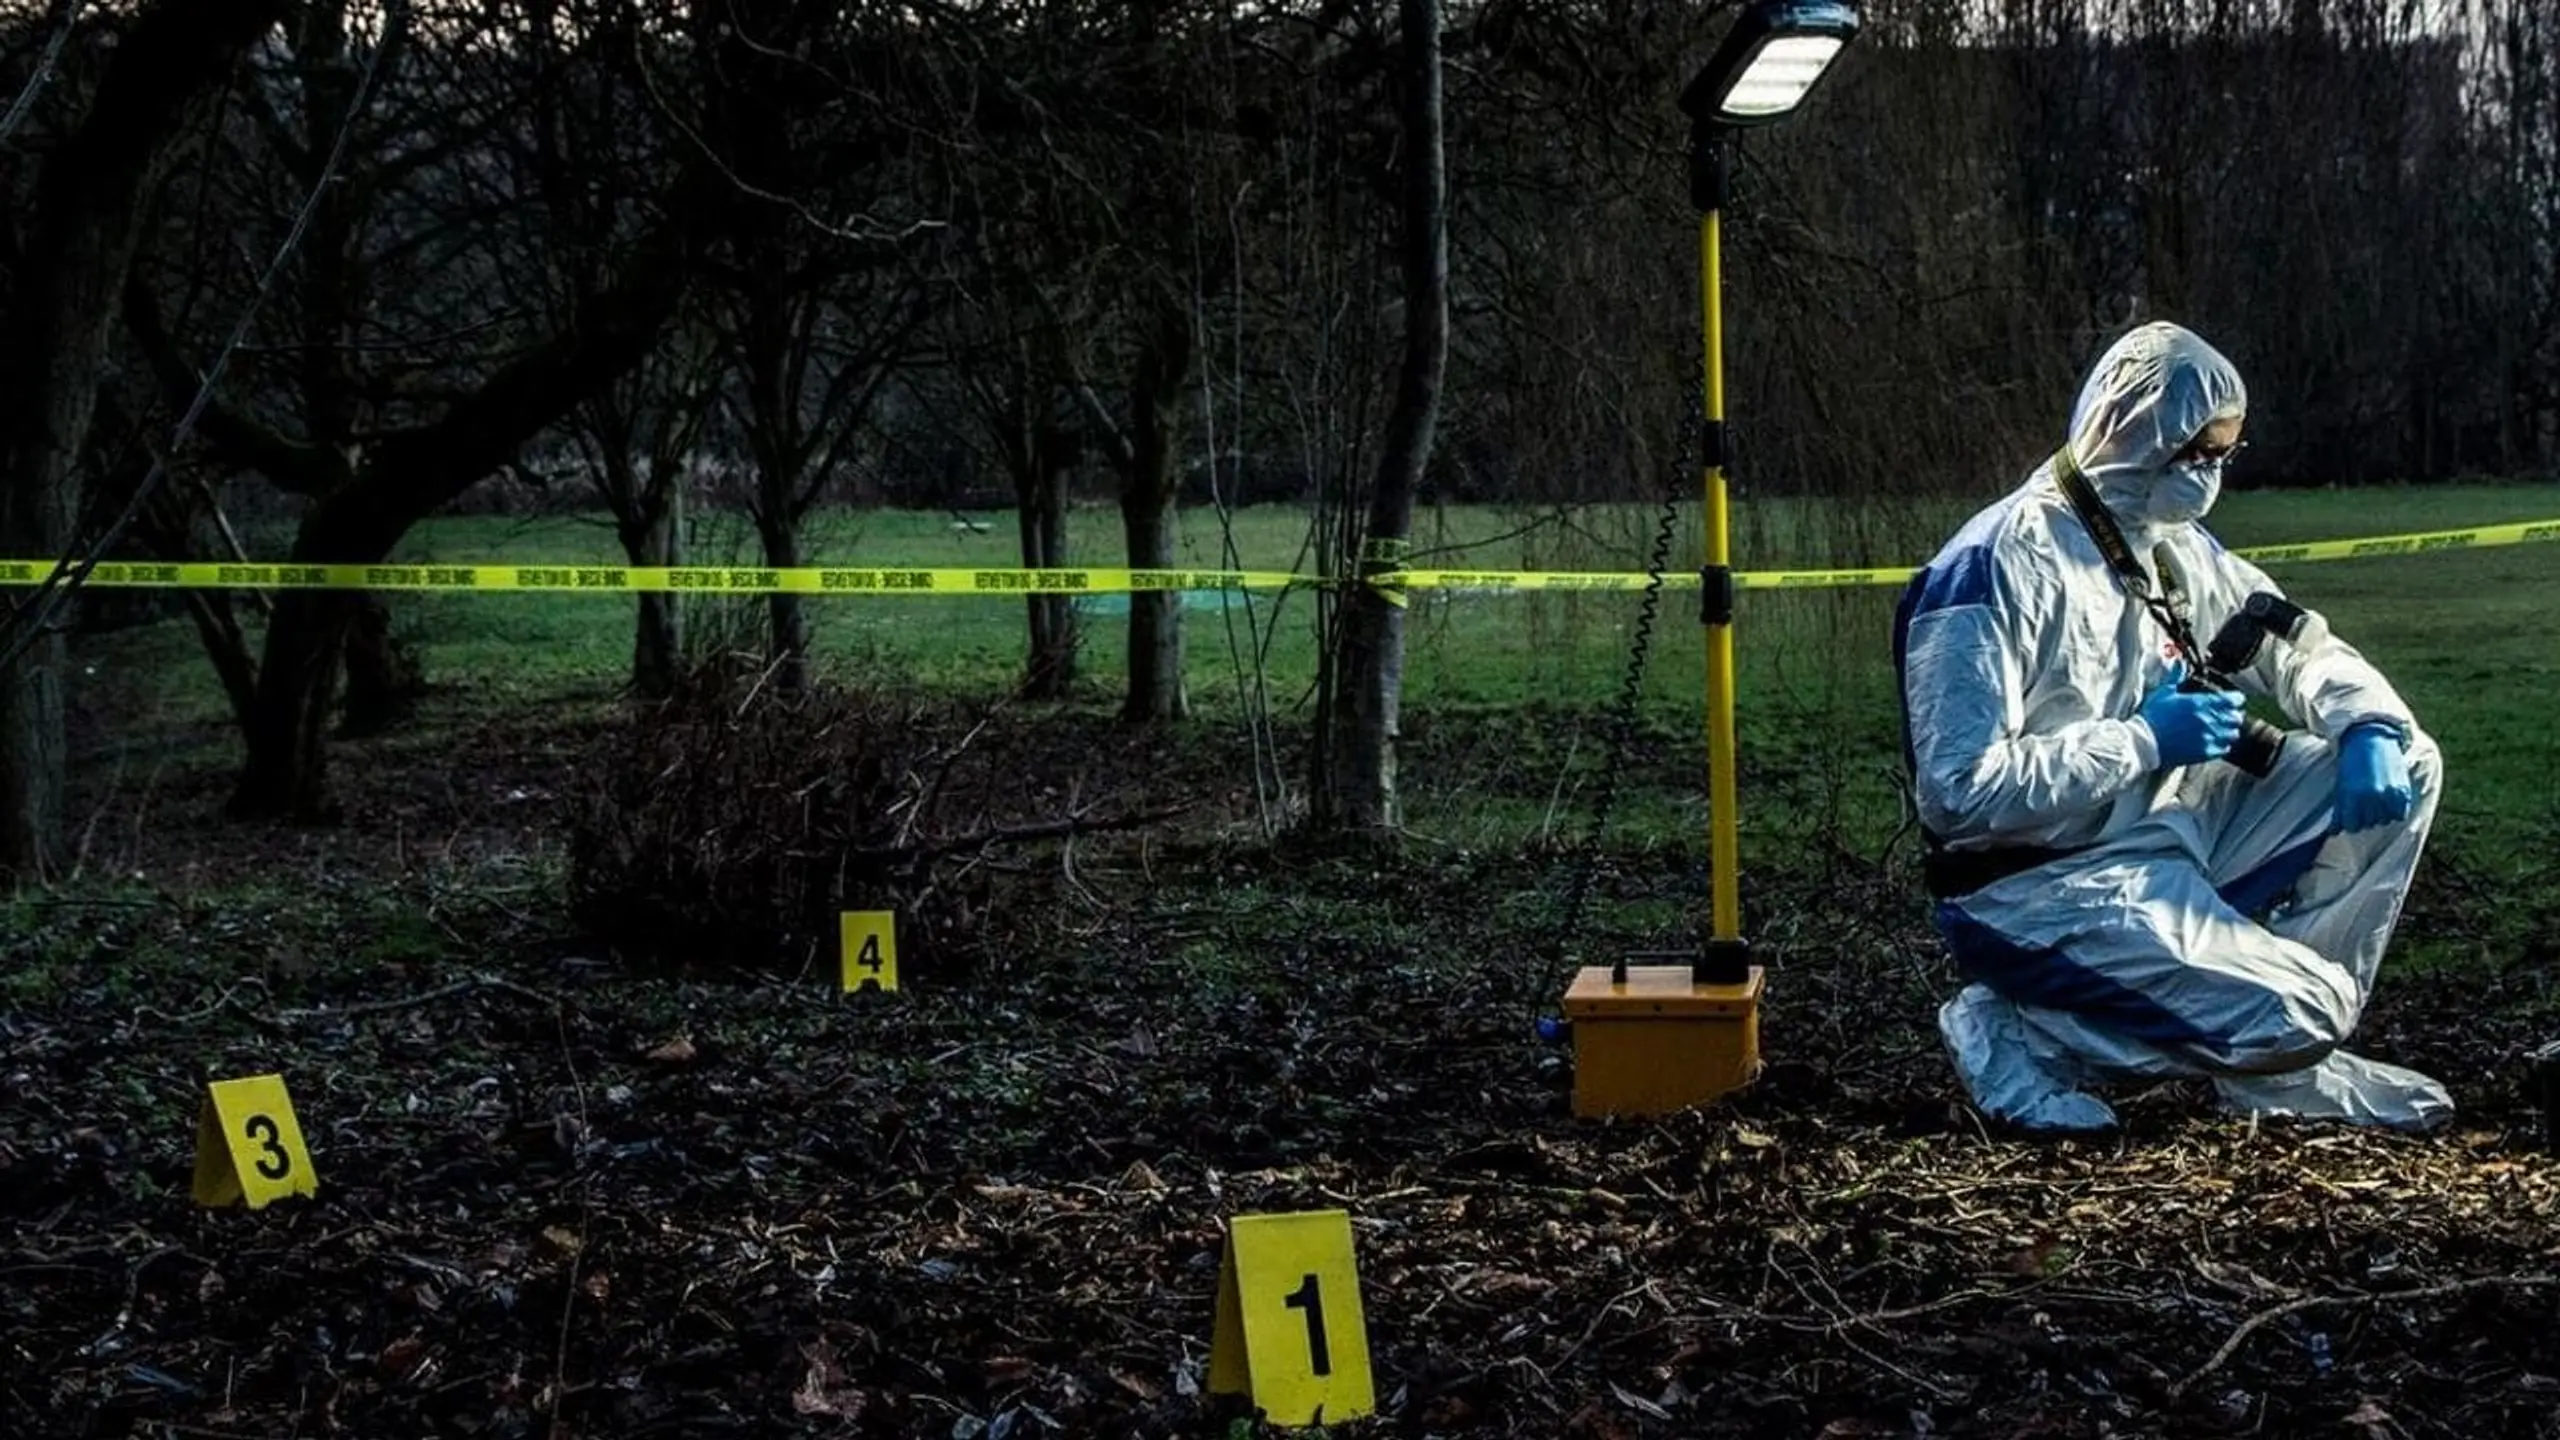 Forensics: The Real CSI